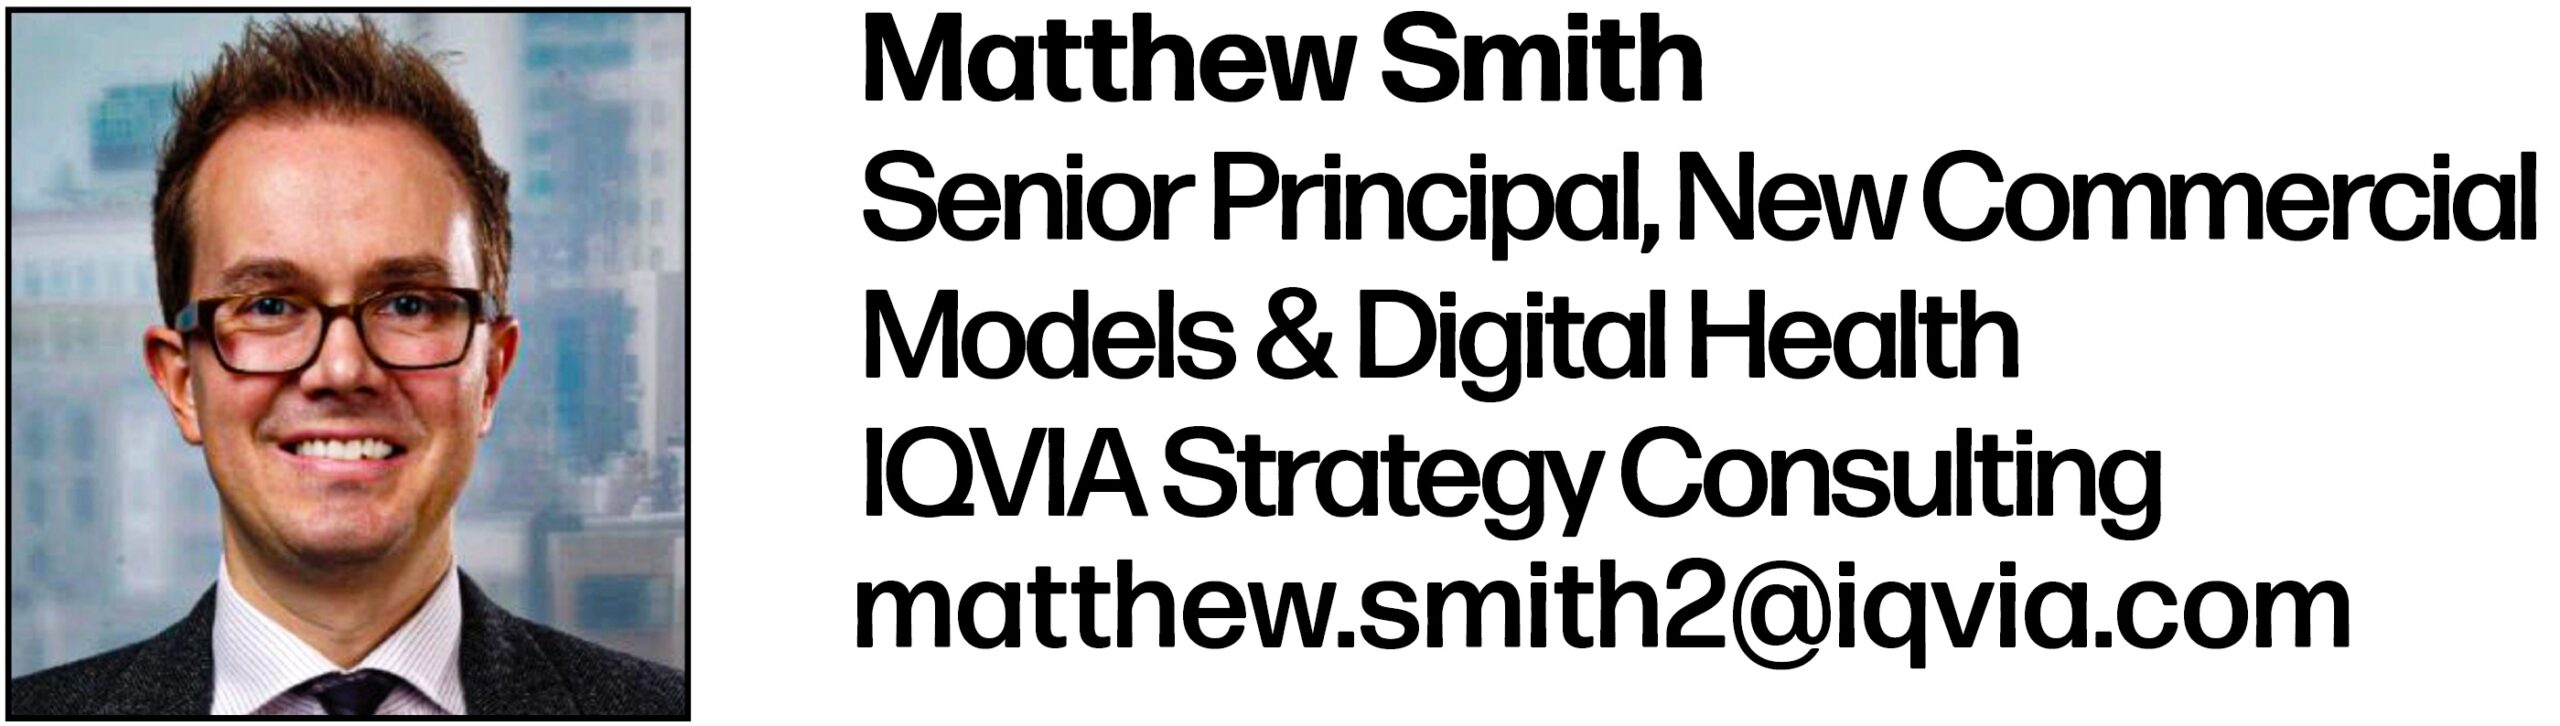 Matthew Smith Senior Principal, New Commercial Models & Digital Health IQVIA Strategy Consulting matthew.smith2@iqvia.com